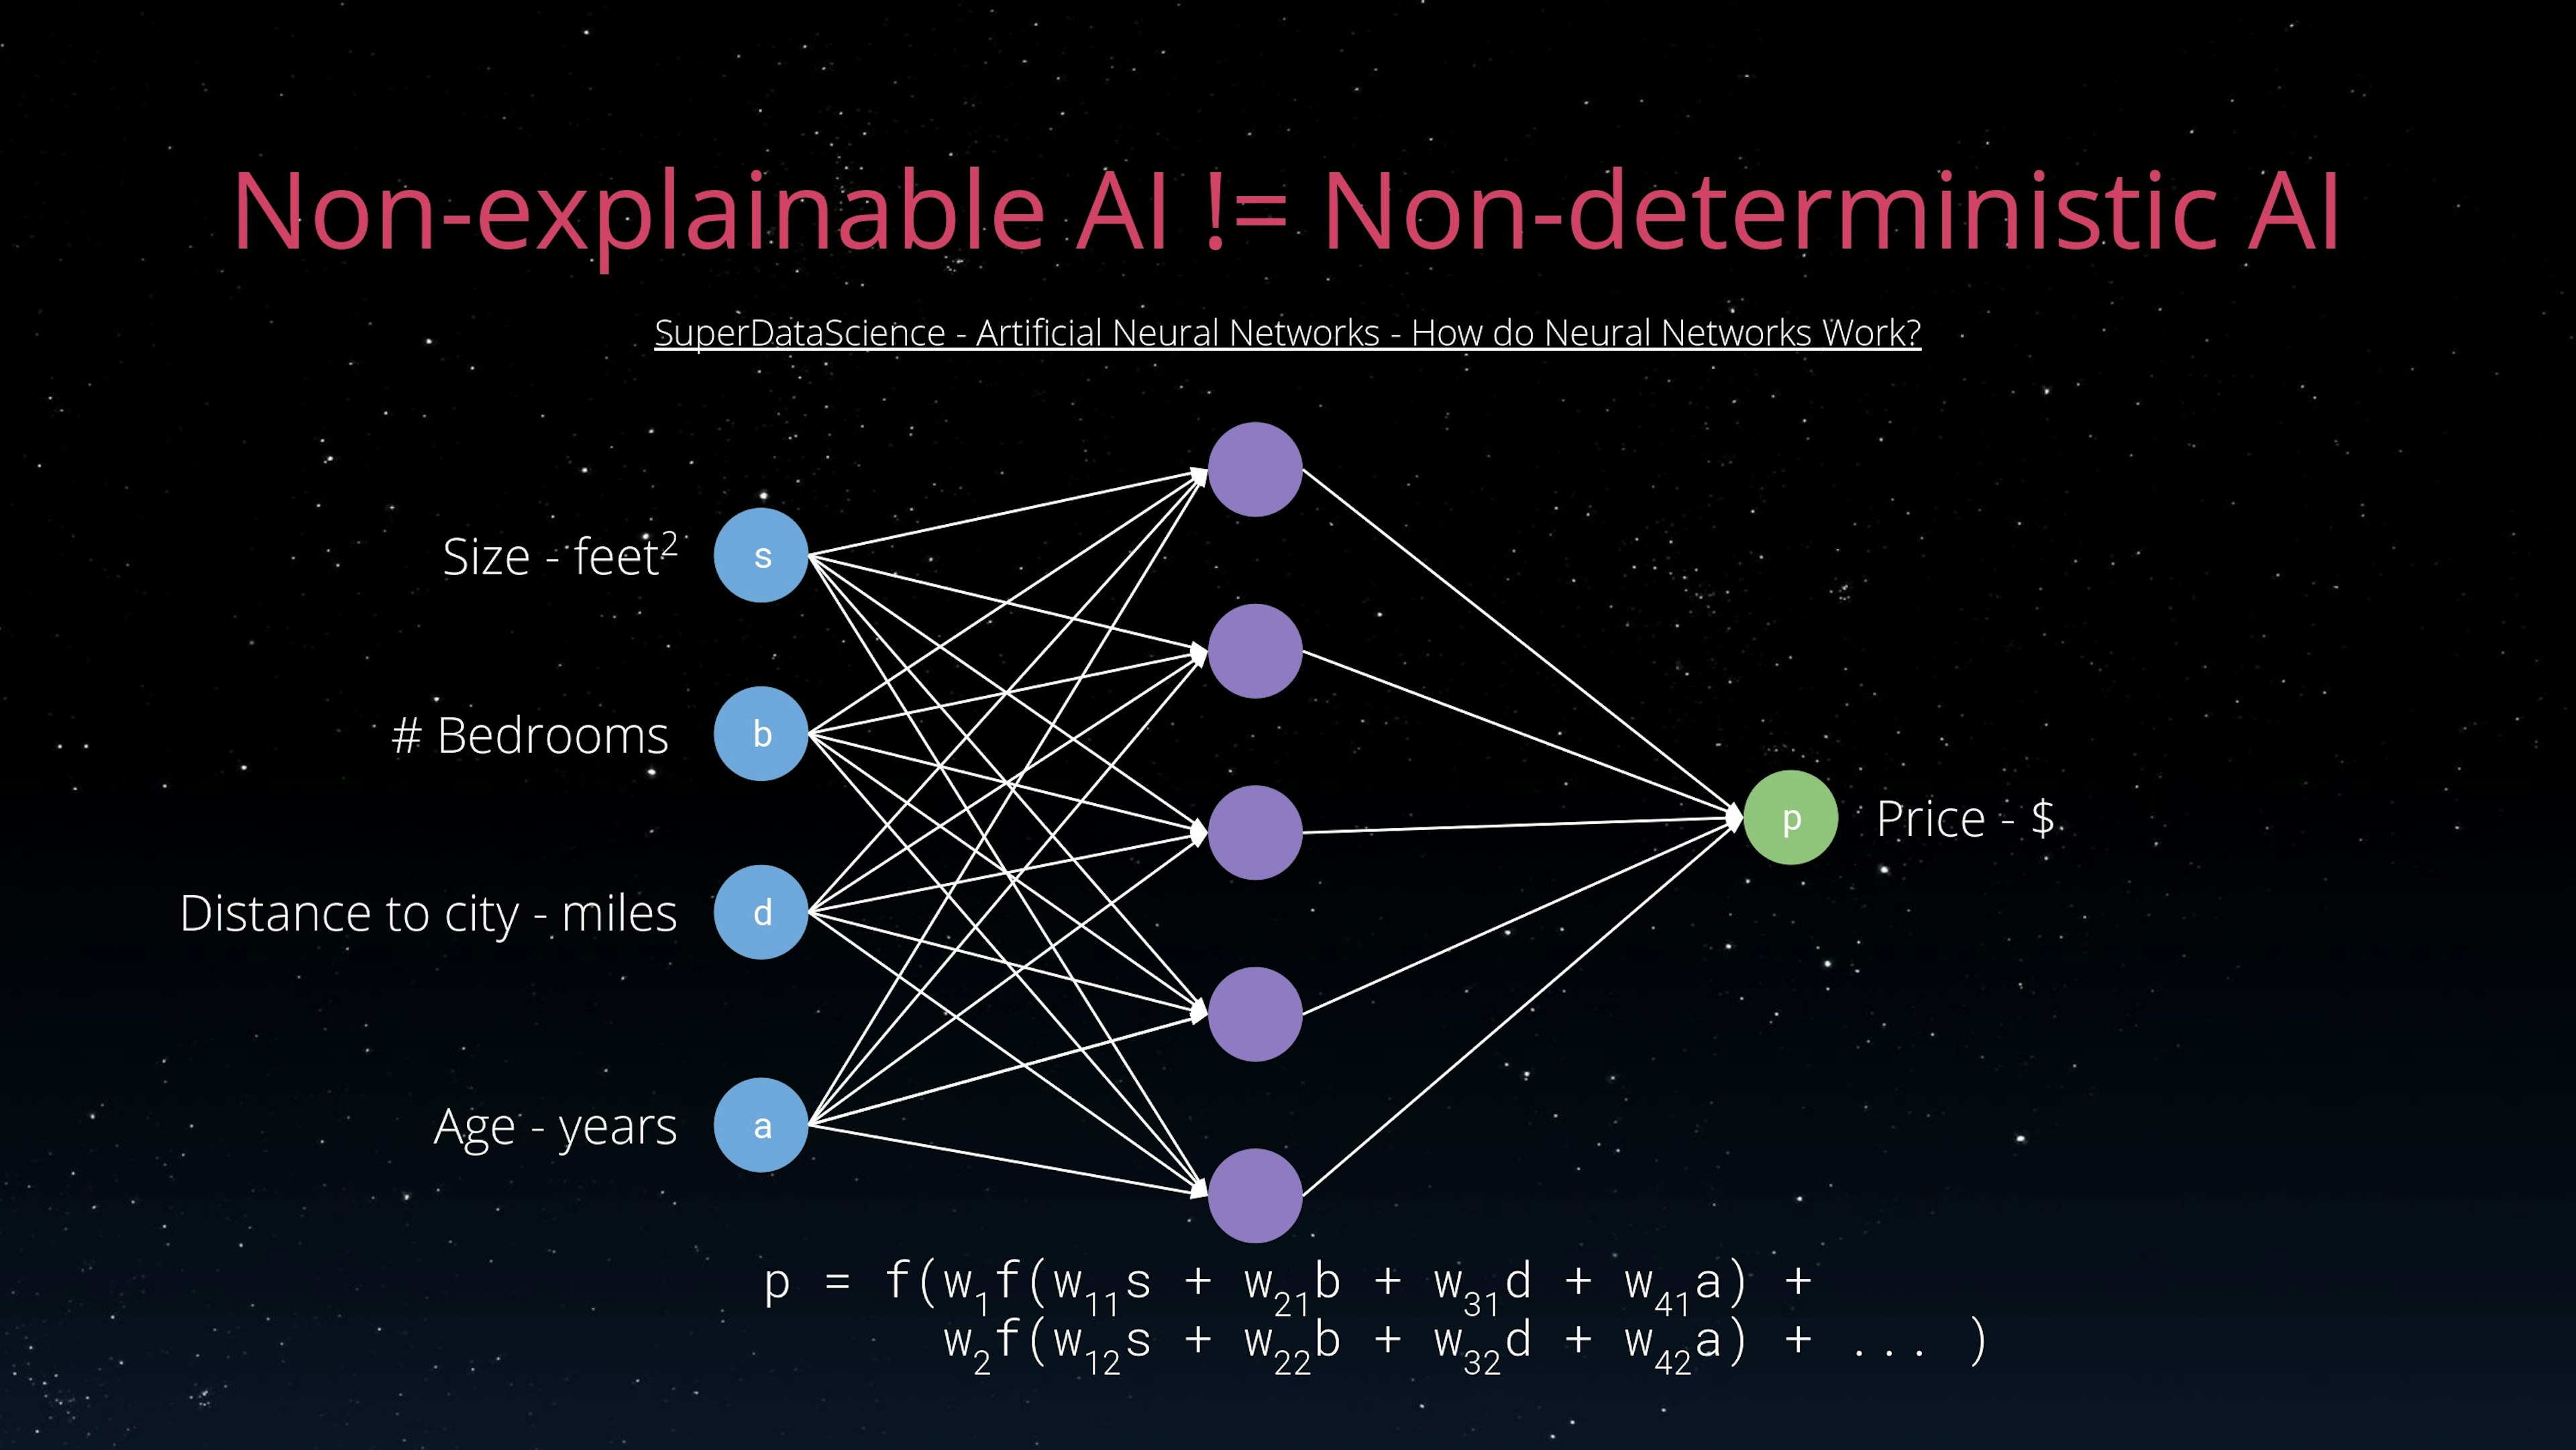 The three stages of Explainable AI - Non-explainable AI != Non-detemistic AI